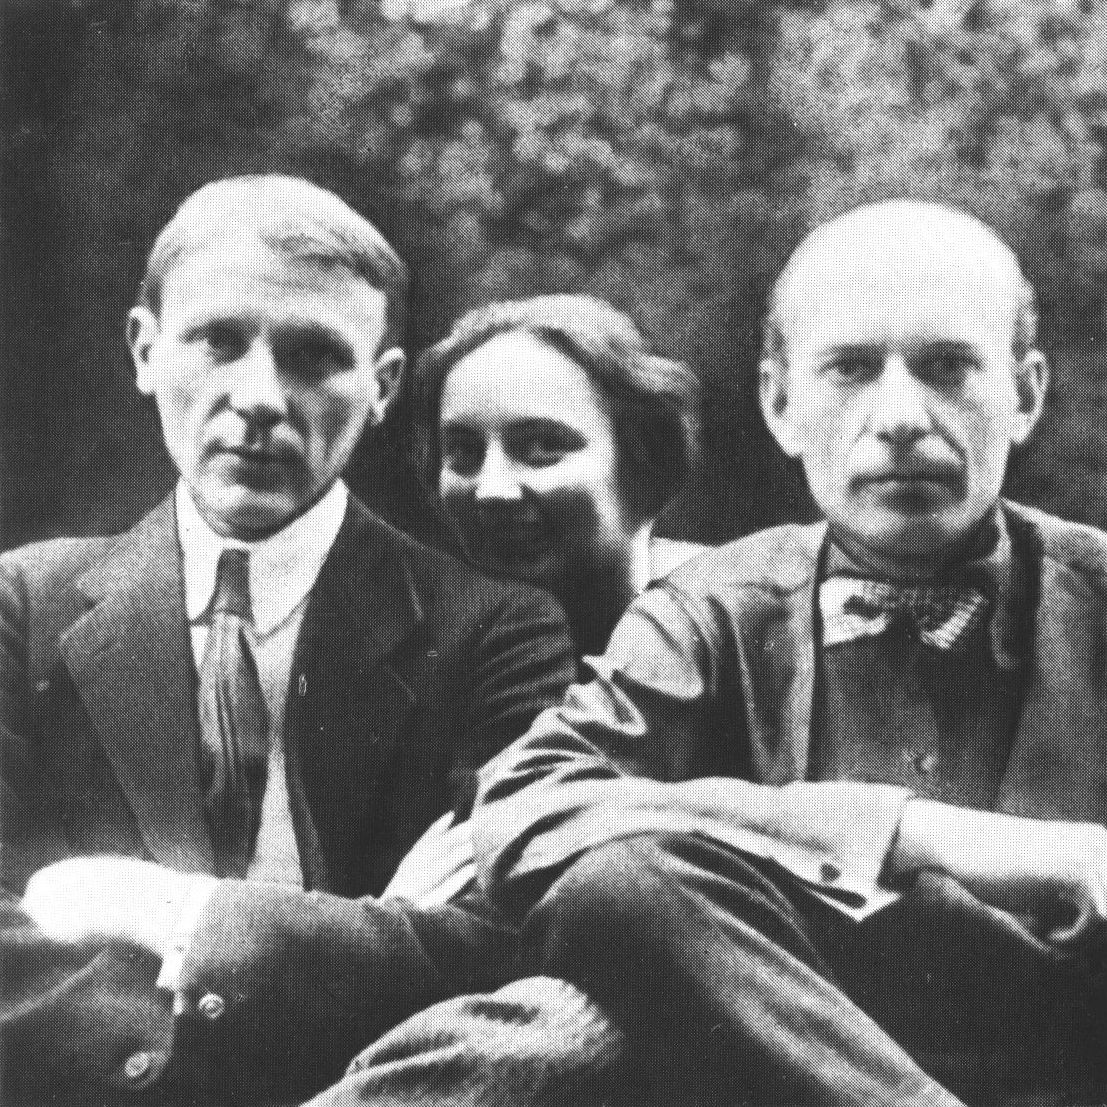 М. Булгаков, Л. Белозерская, Н.Н. Лямин, друг М. Булгакова. 1926 г.